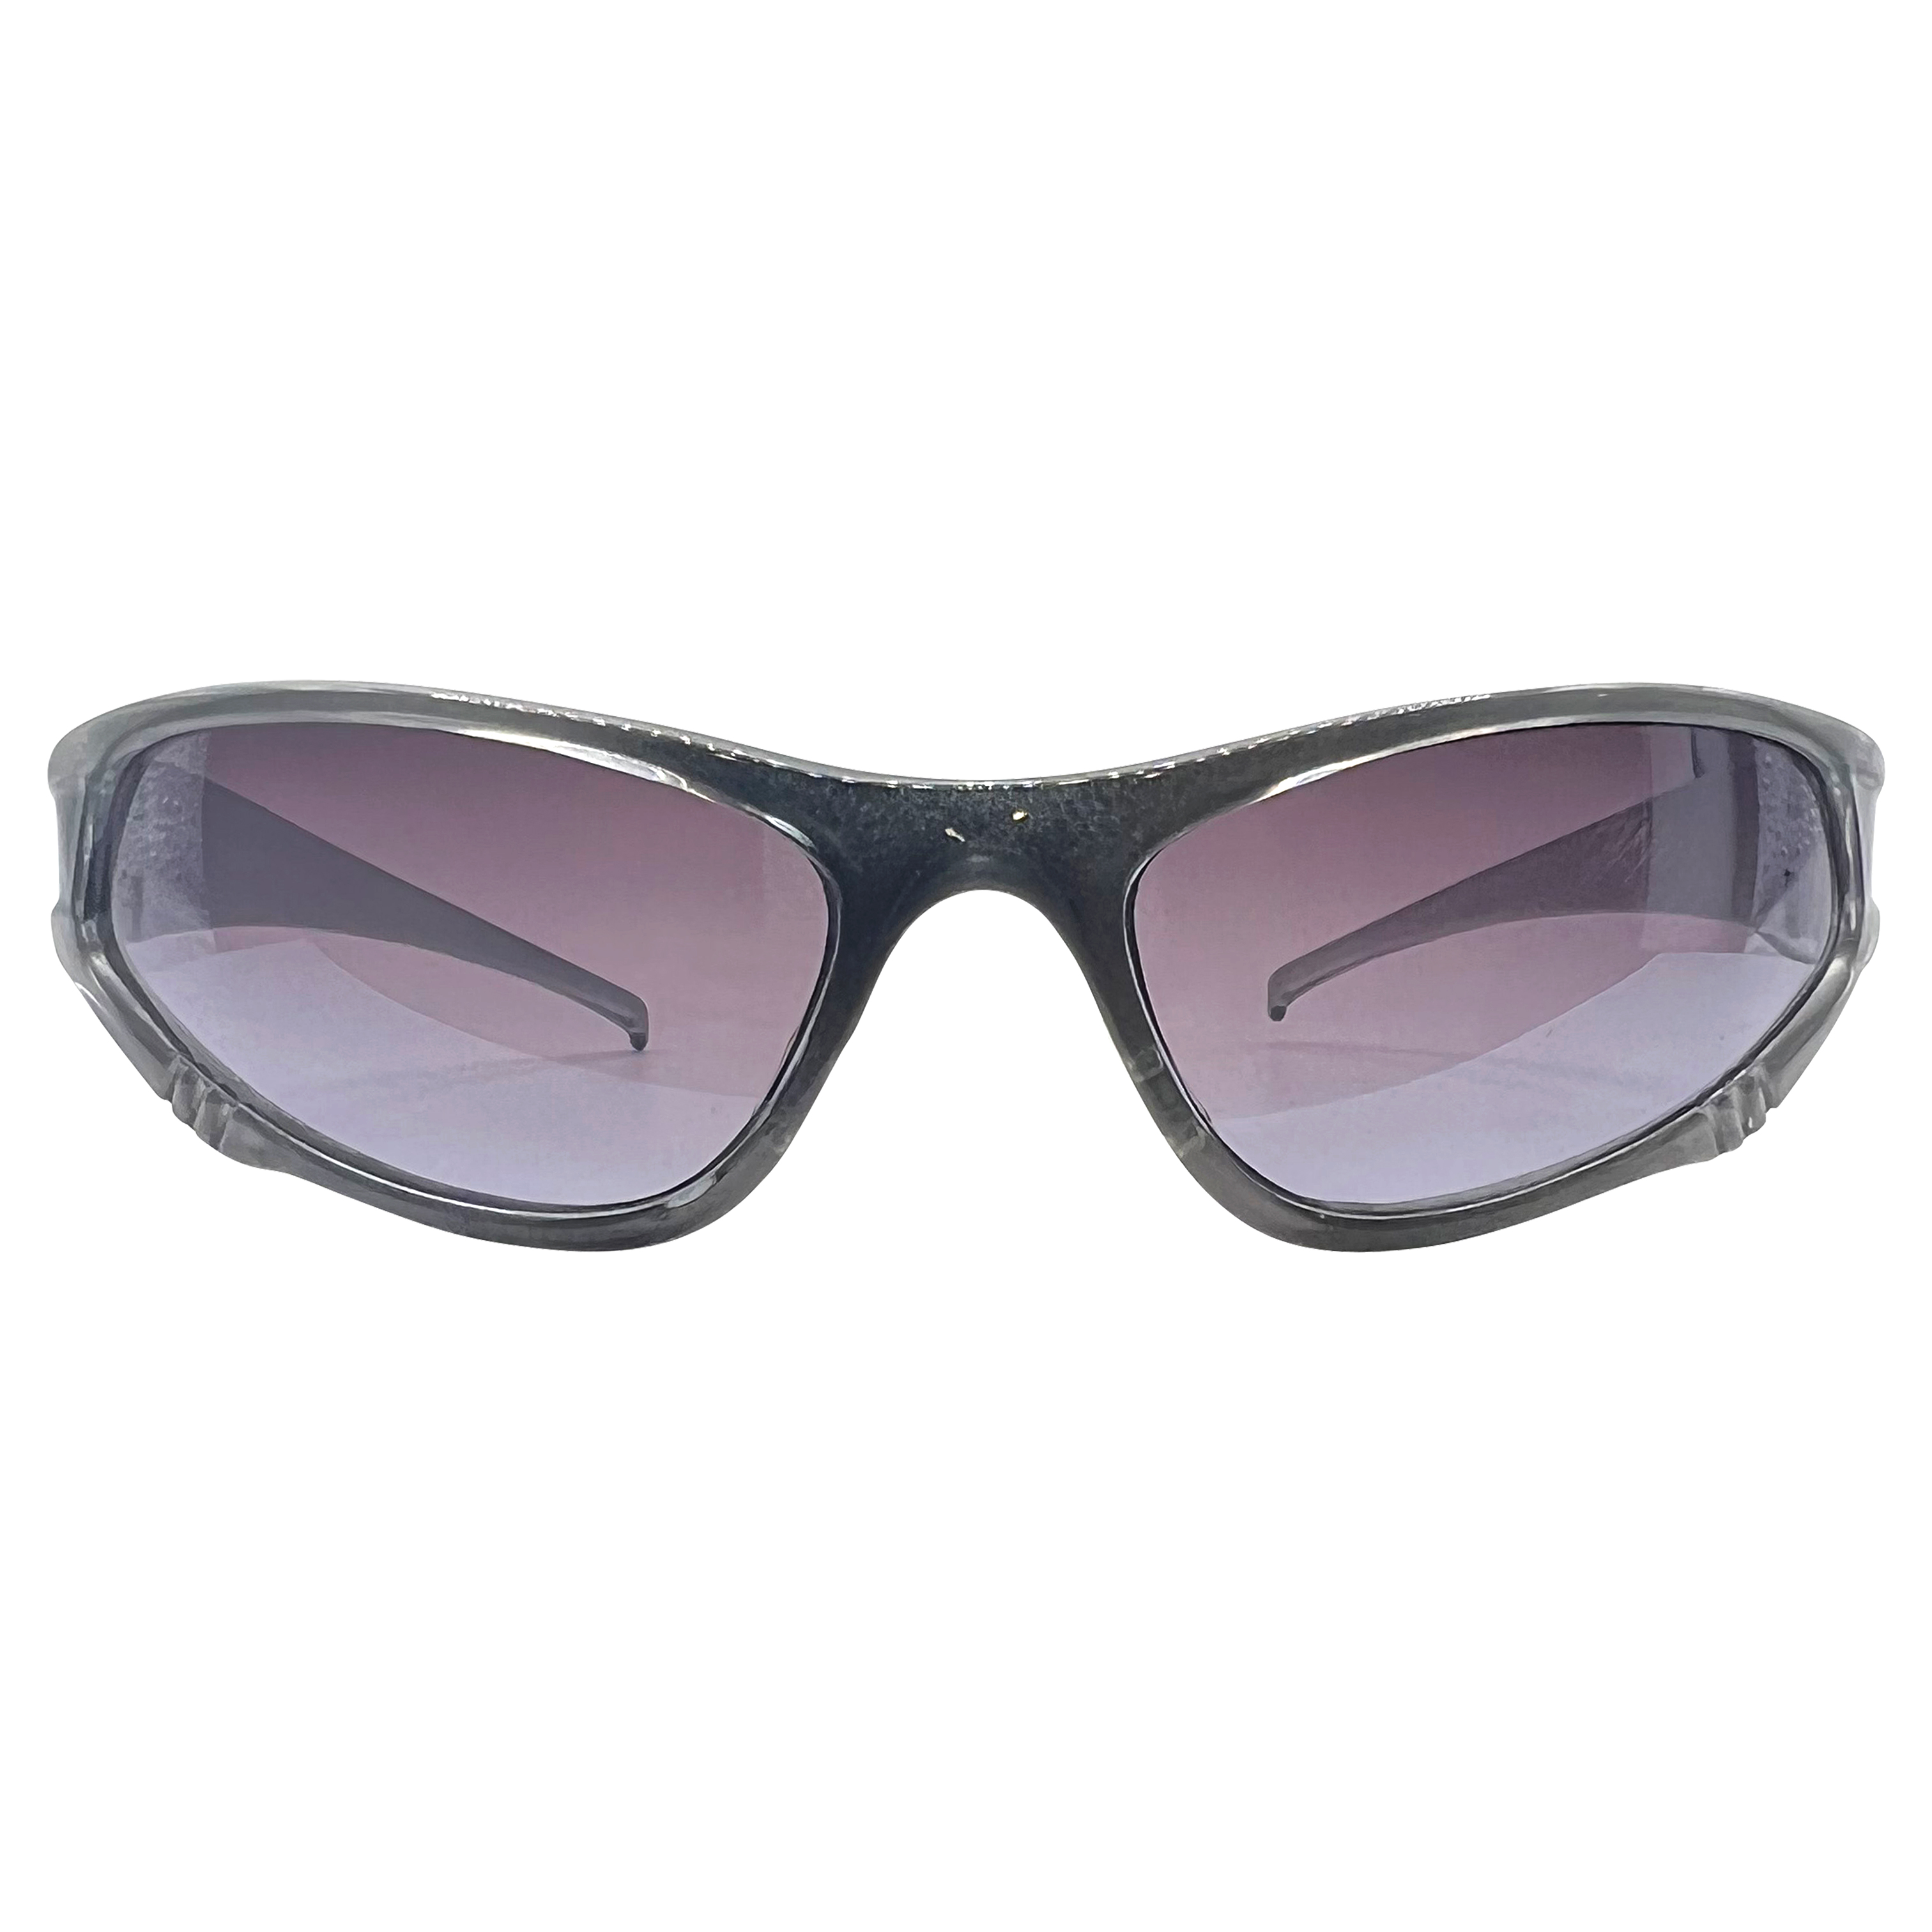 TWERK Smoke/Silver Fashion Sports Sunglasses